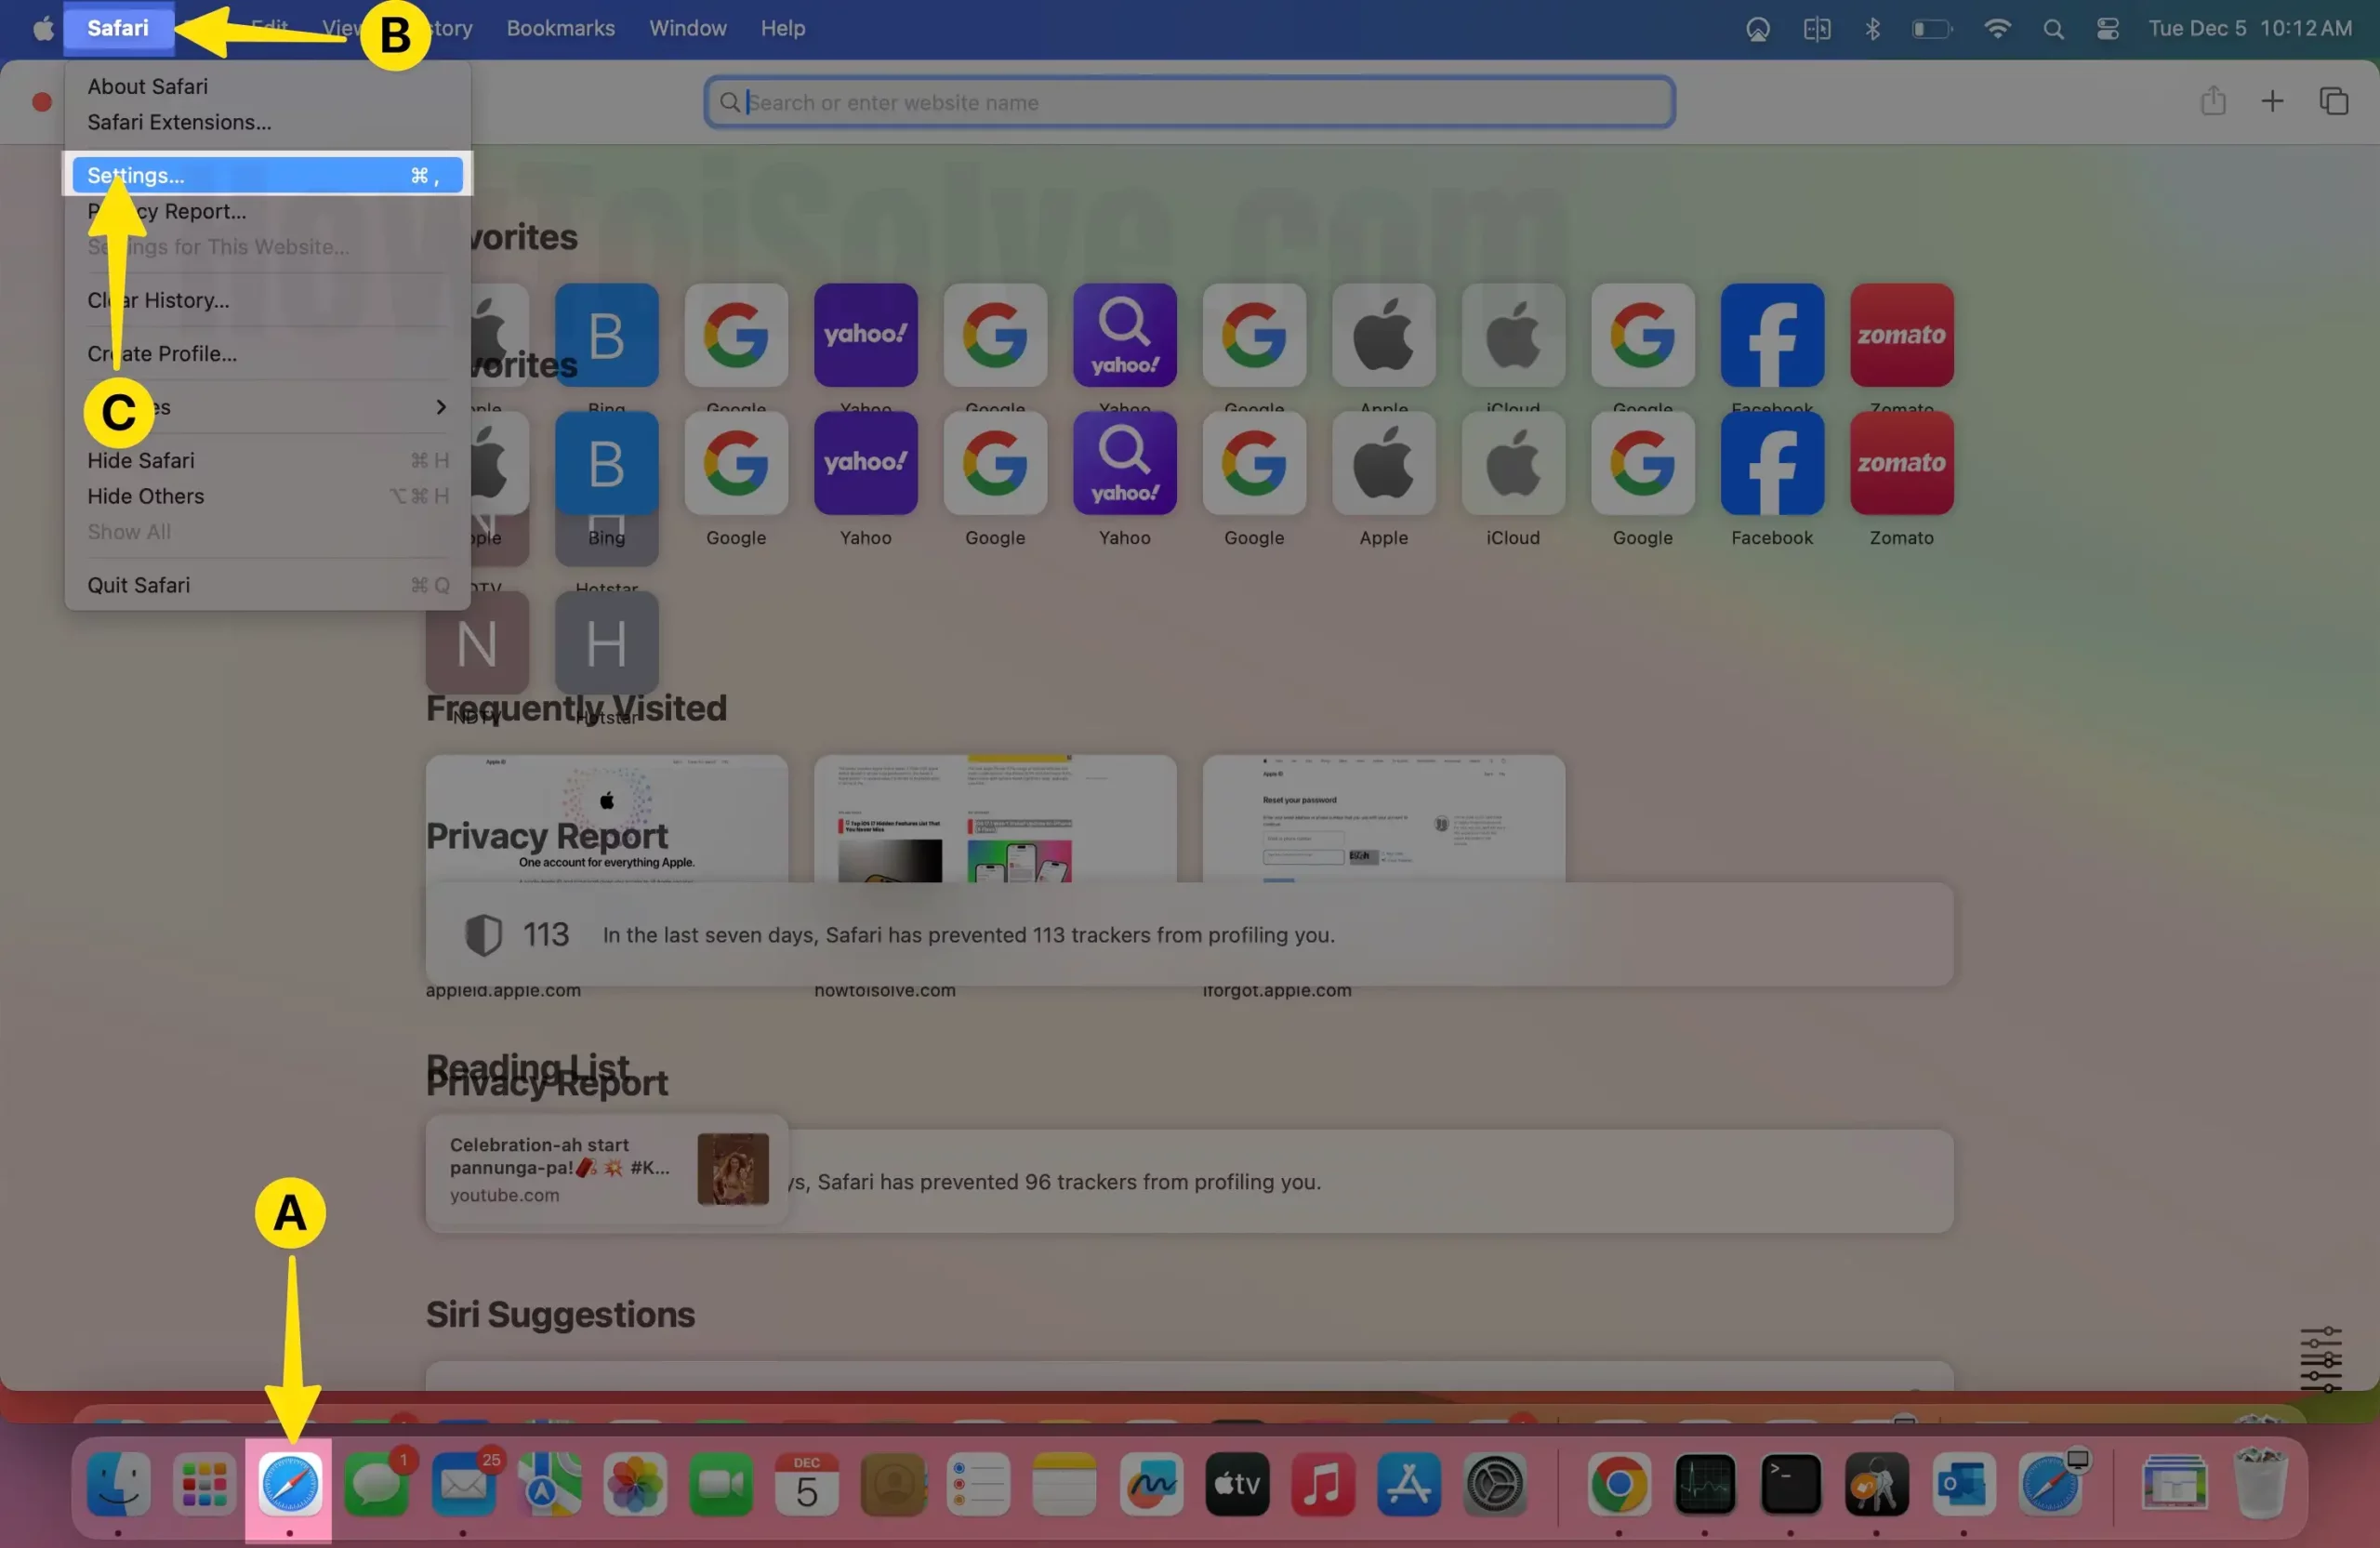 Launch Safari Open Safari From menu Select Settings on Mac